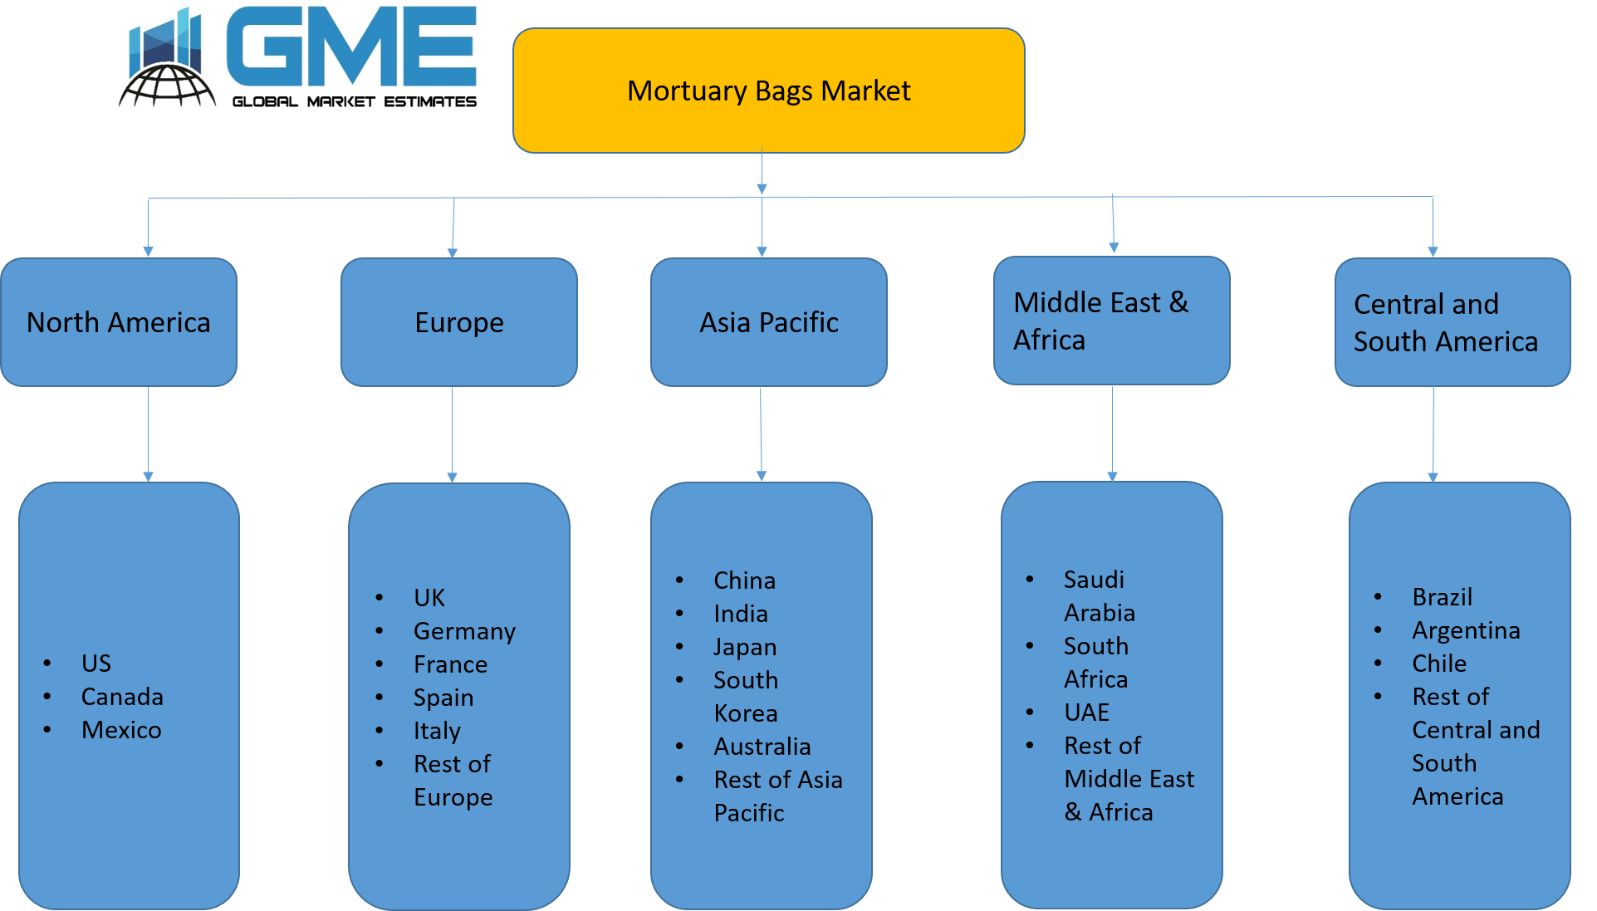 Mortuary Bags Market - Regional Analysis